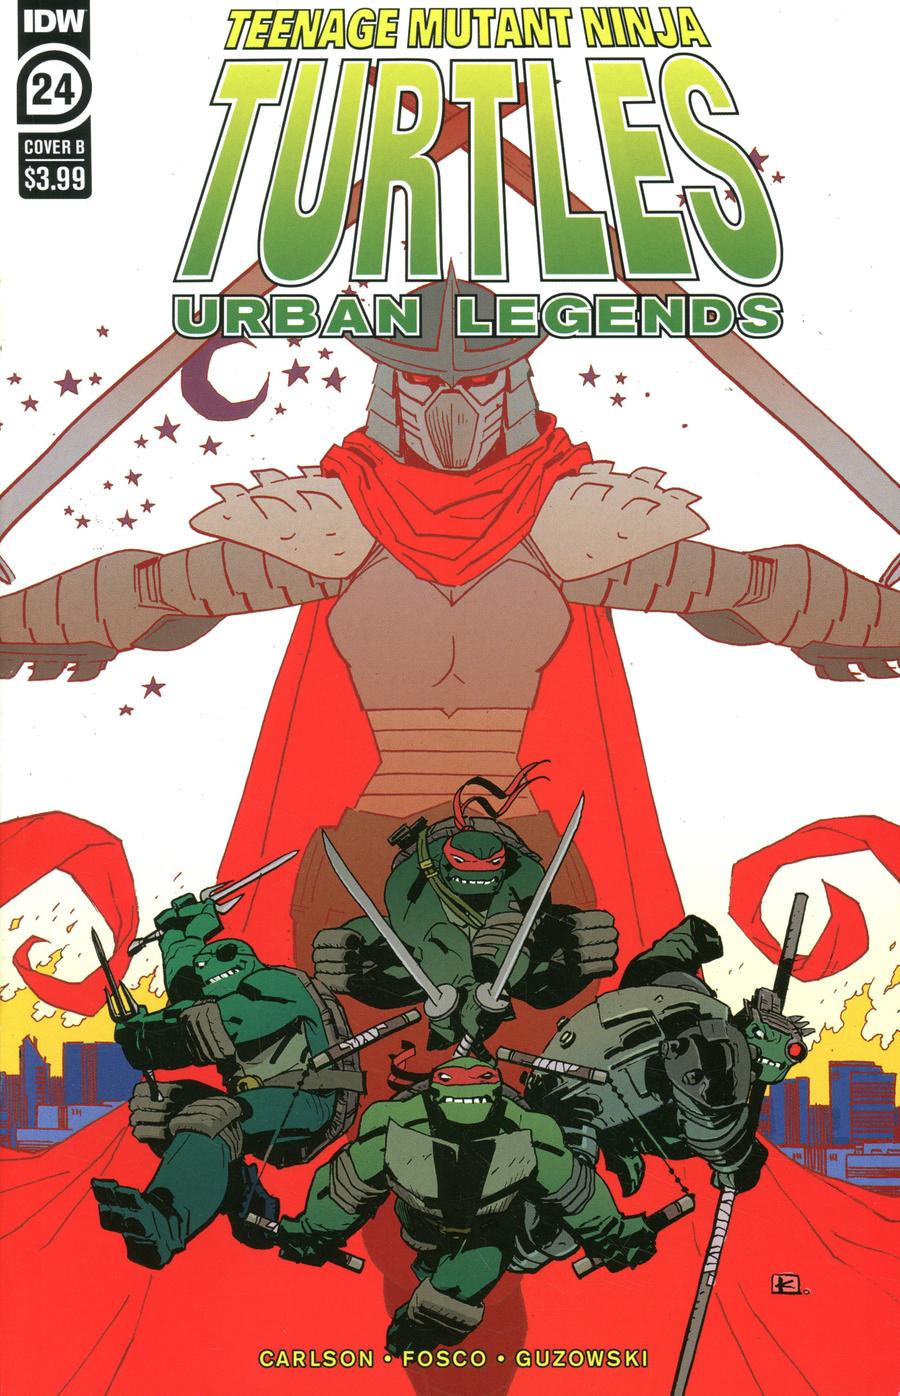 Teenage Mutant Ninja Turtles Urban Legends #24 Cover B Variant Andy Kuhn Cover